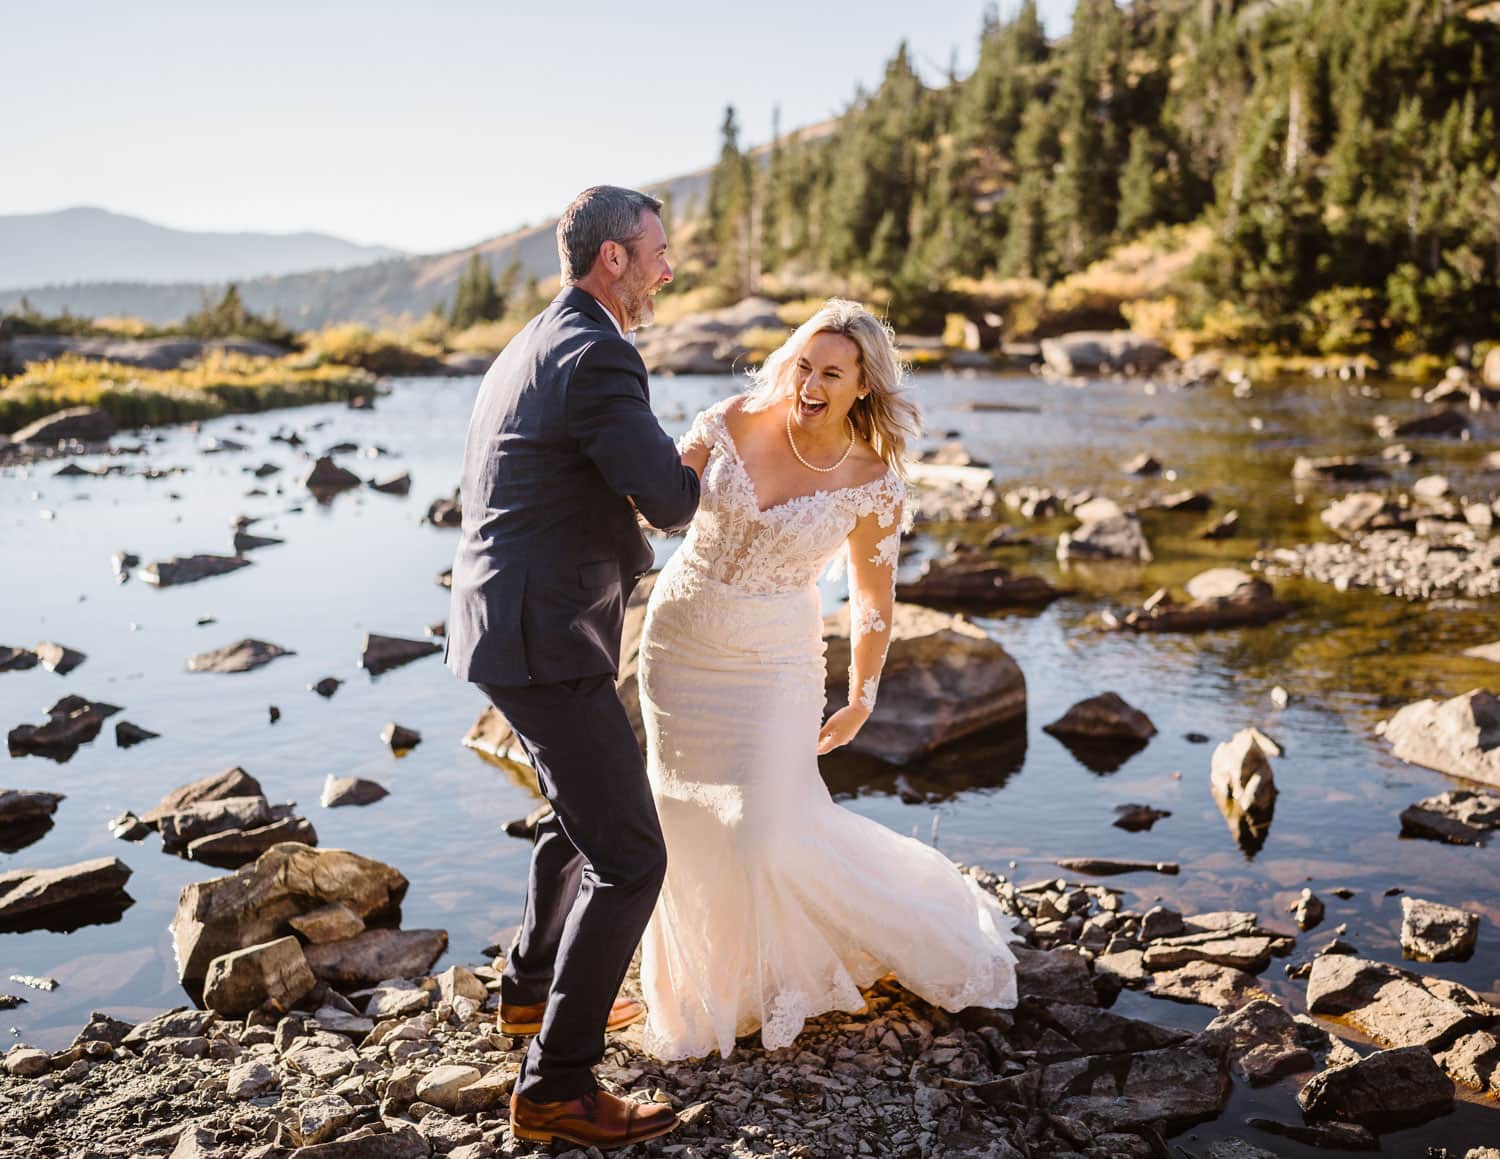 A couple sharing a laugh near an alpine lake at Breckenridge, Colorado for their elopement.